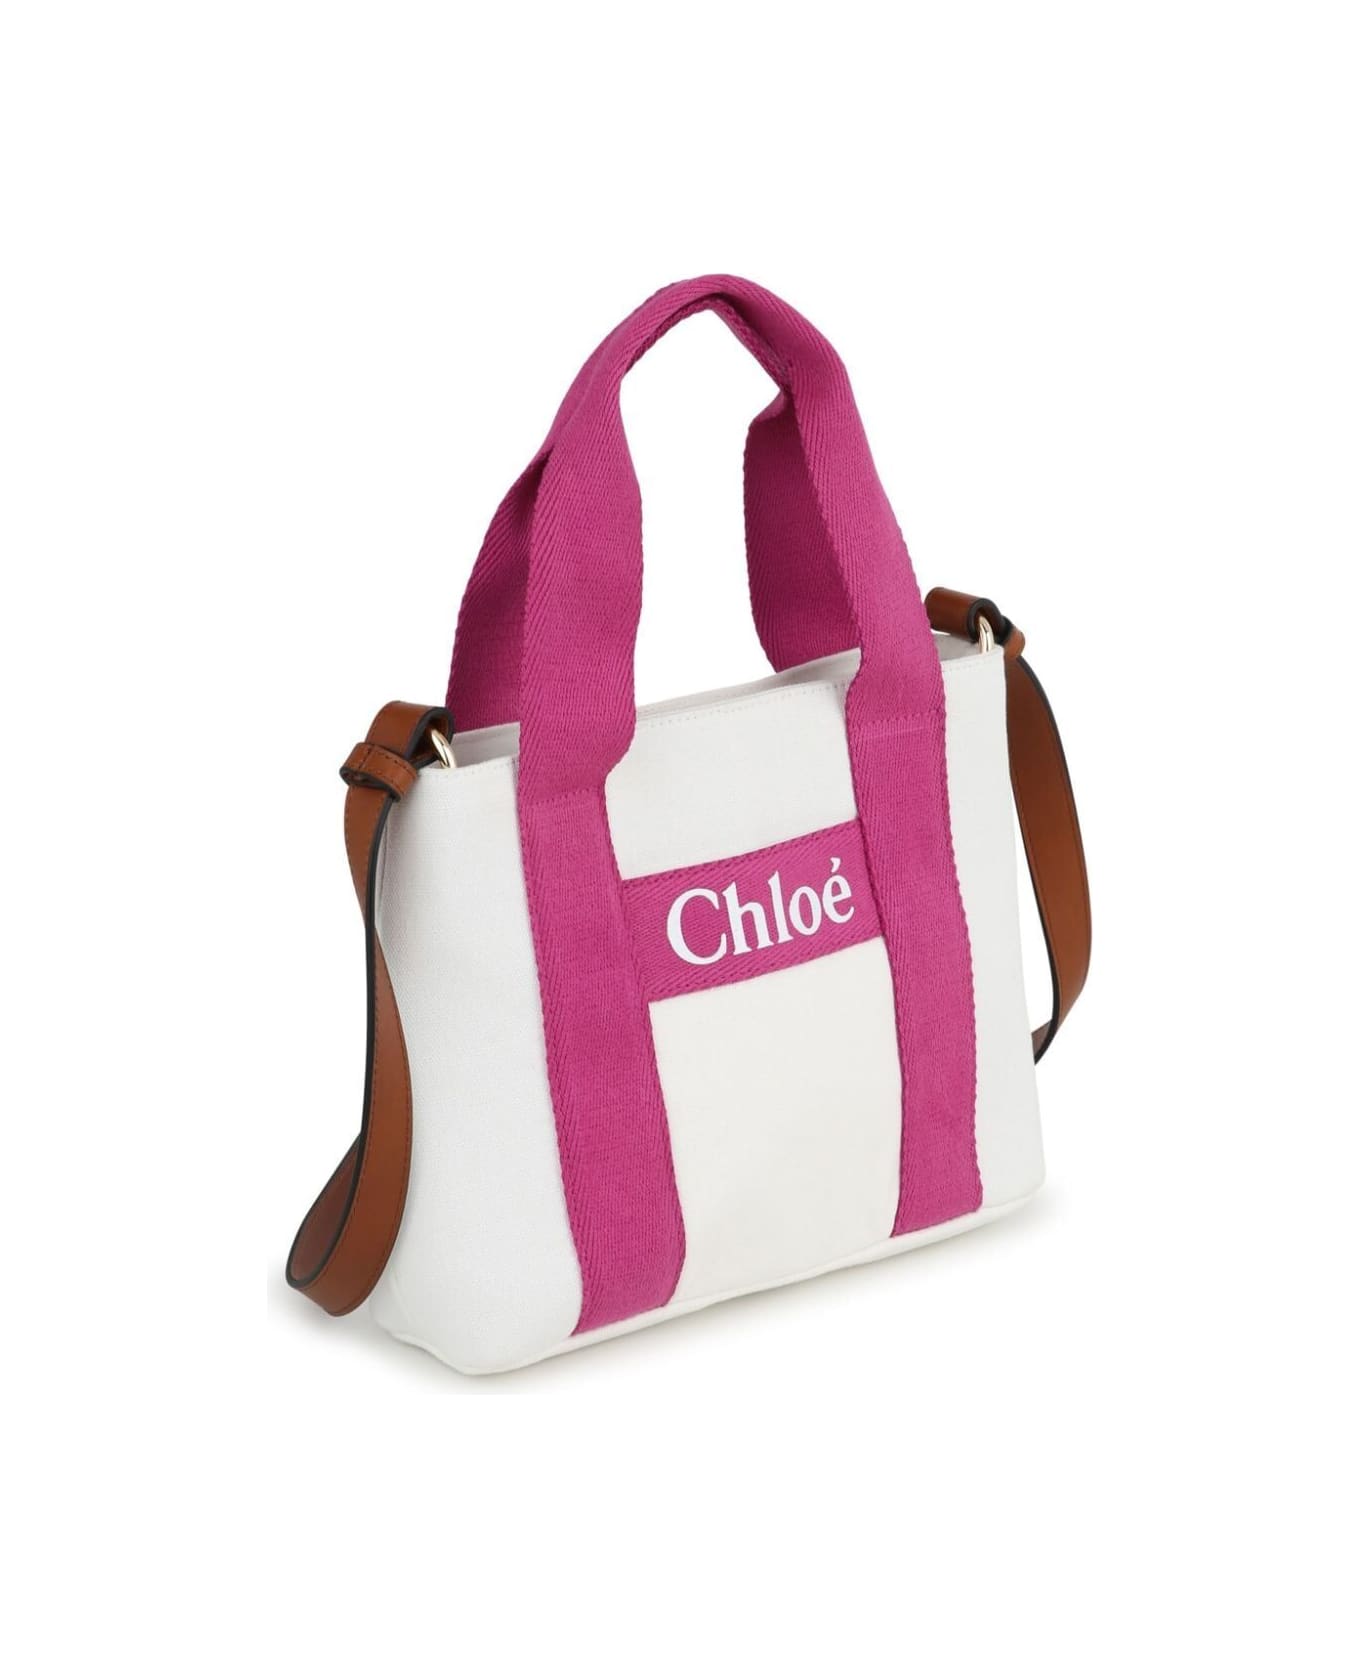 Chloé Bag - Off White